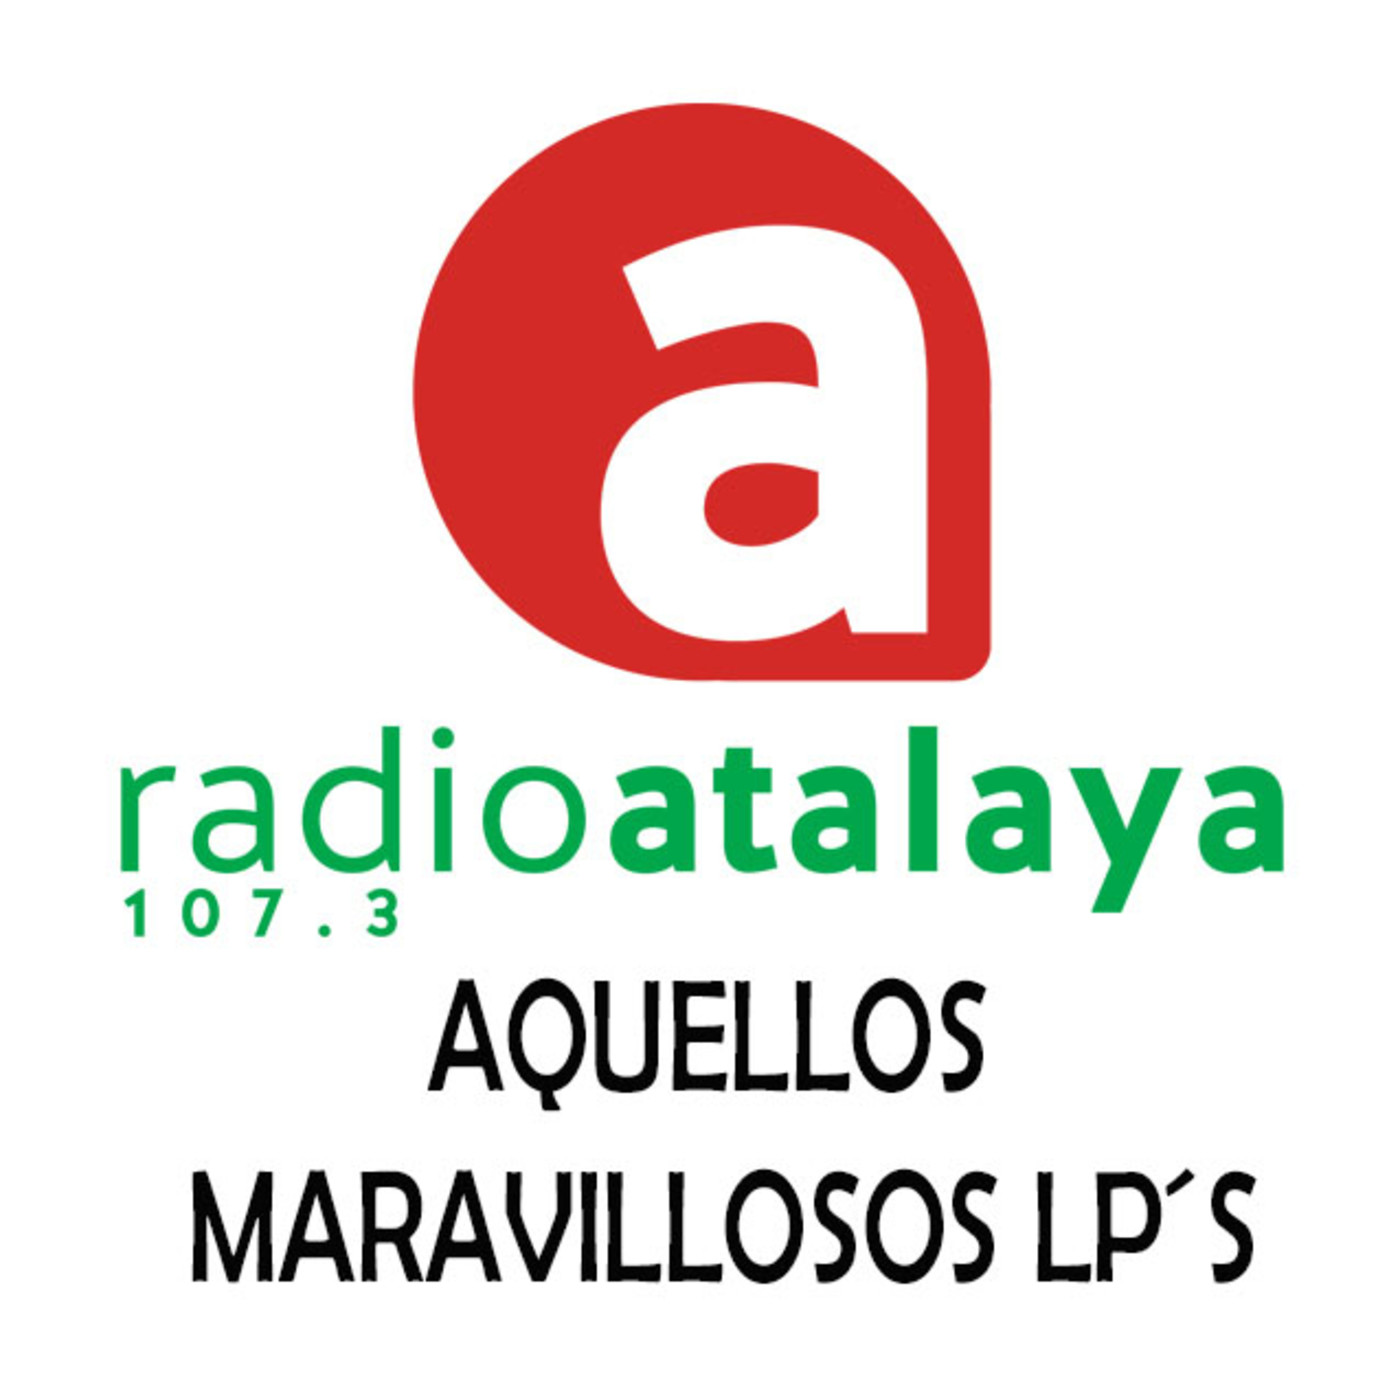 AQUELLOS MARAVILLOSOS LP's: Made in Spain